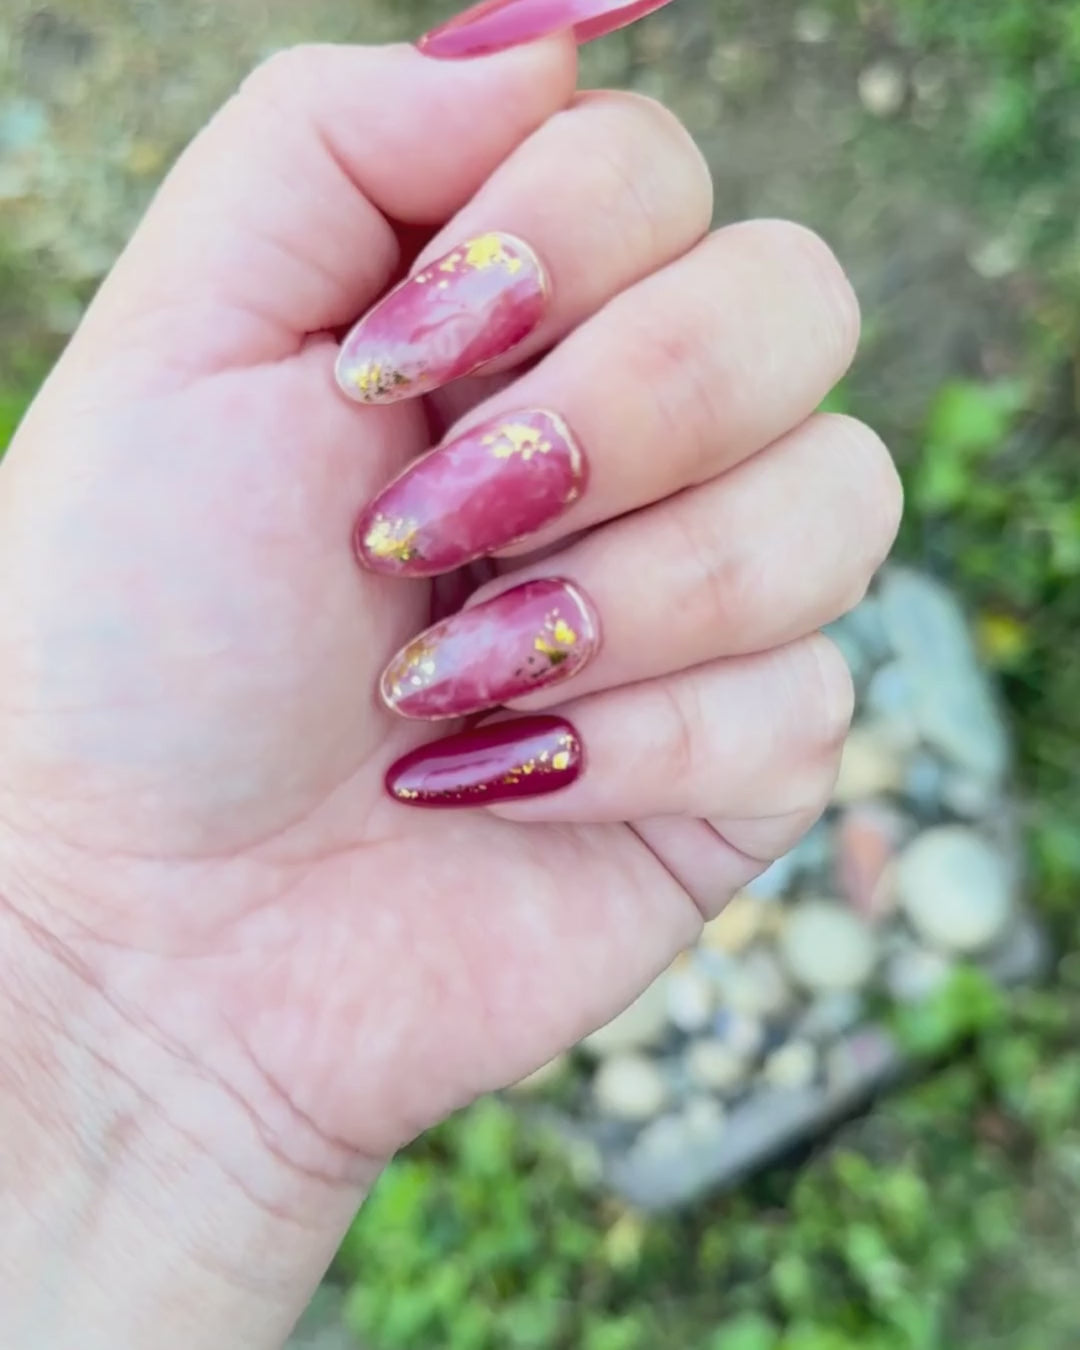 Pink Marble w/Gold Flakes. I'm really enjoying this nail shape. : r/Nails